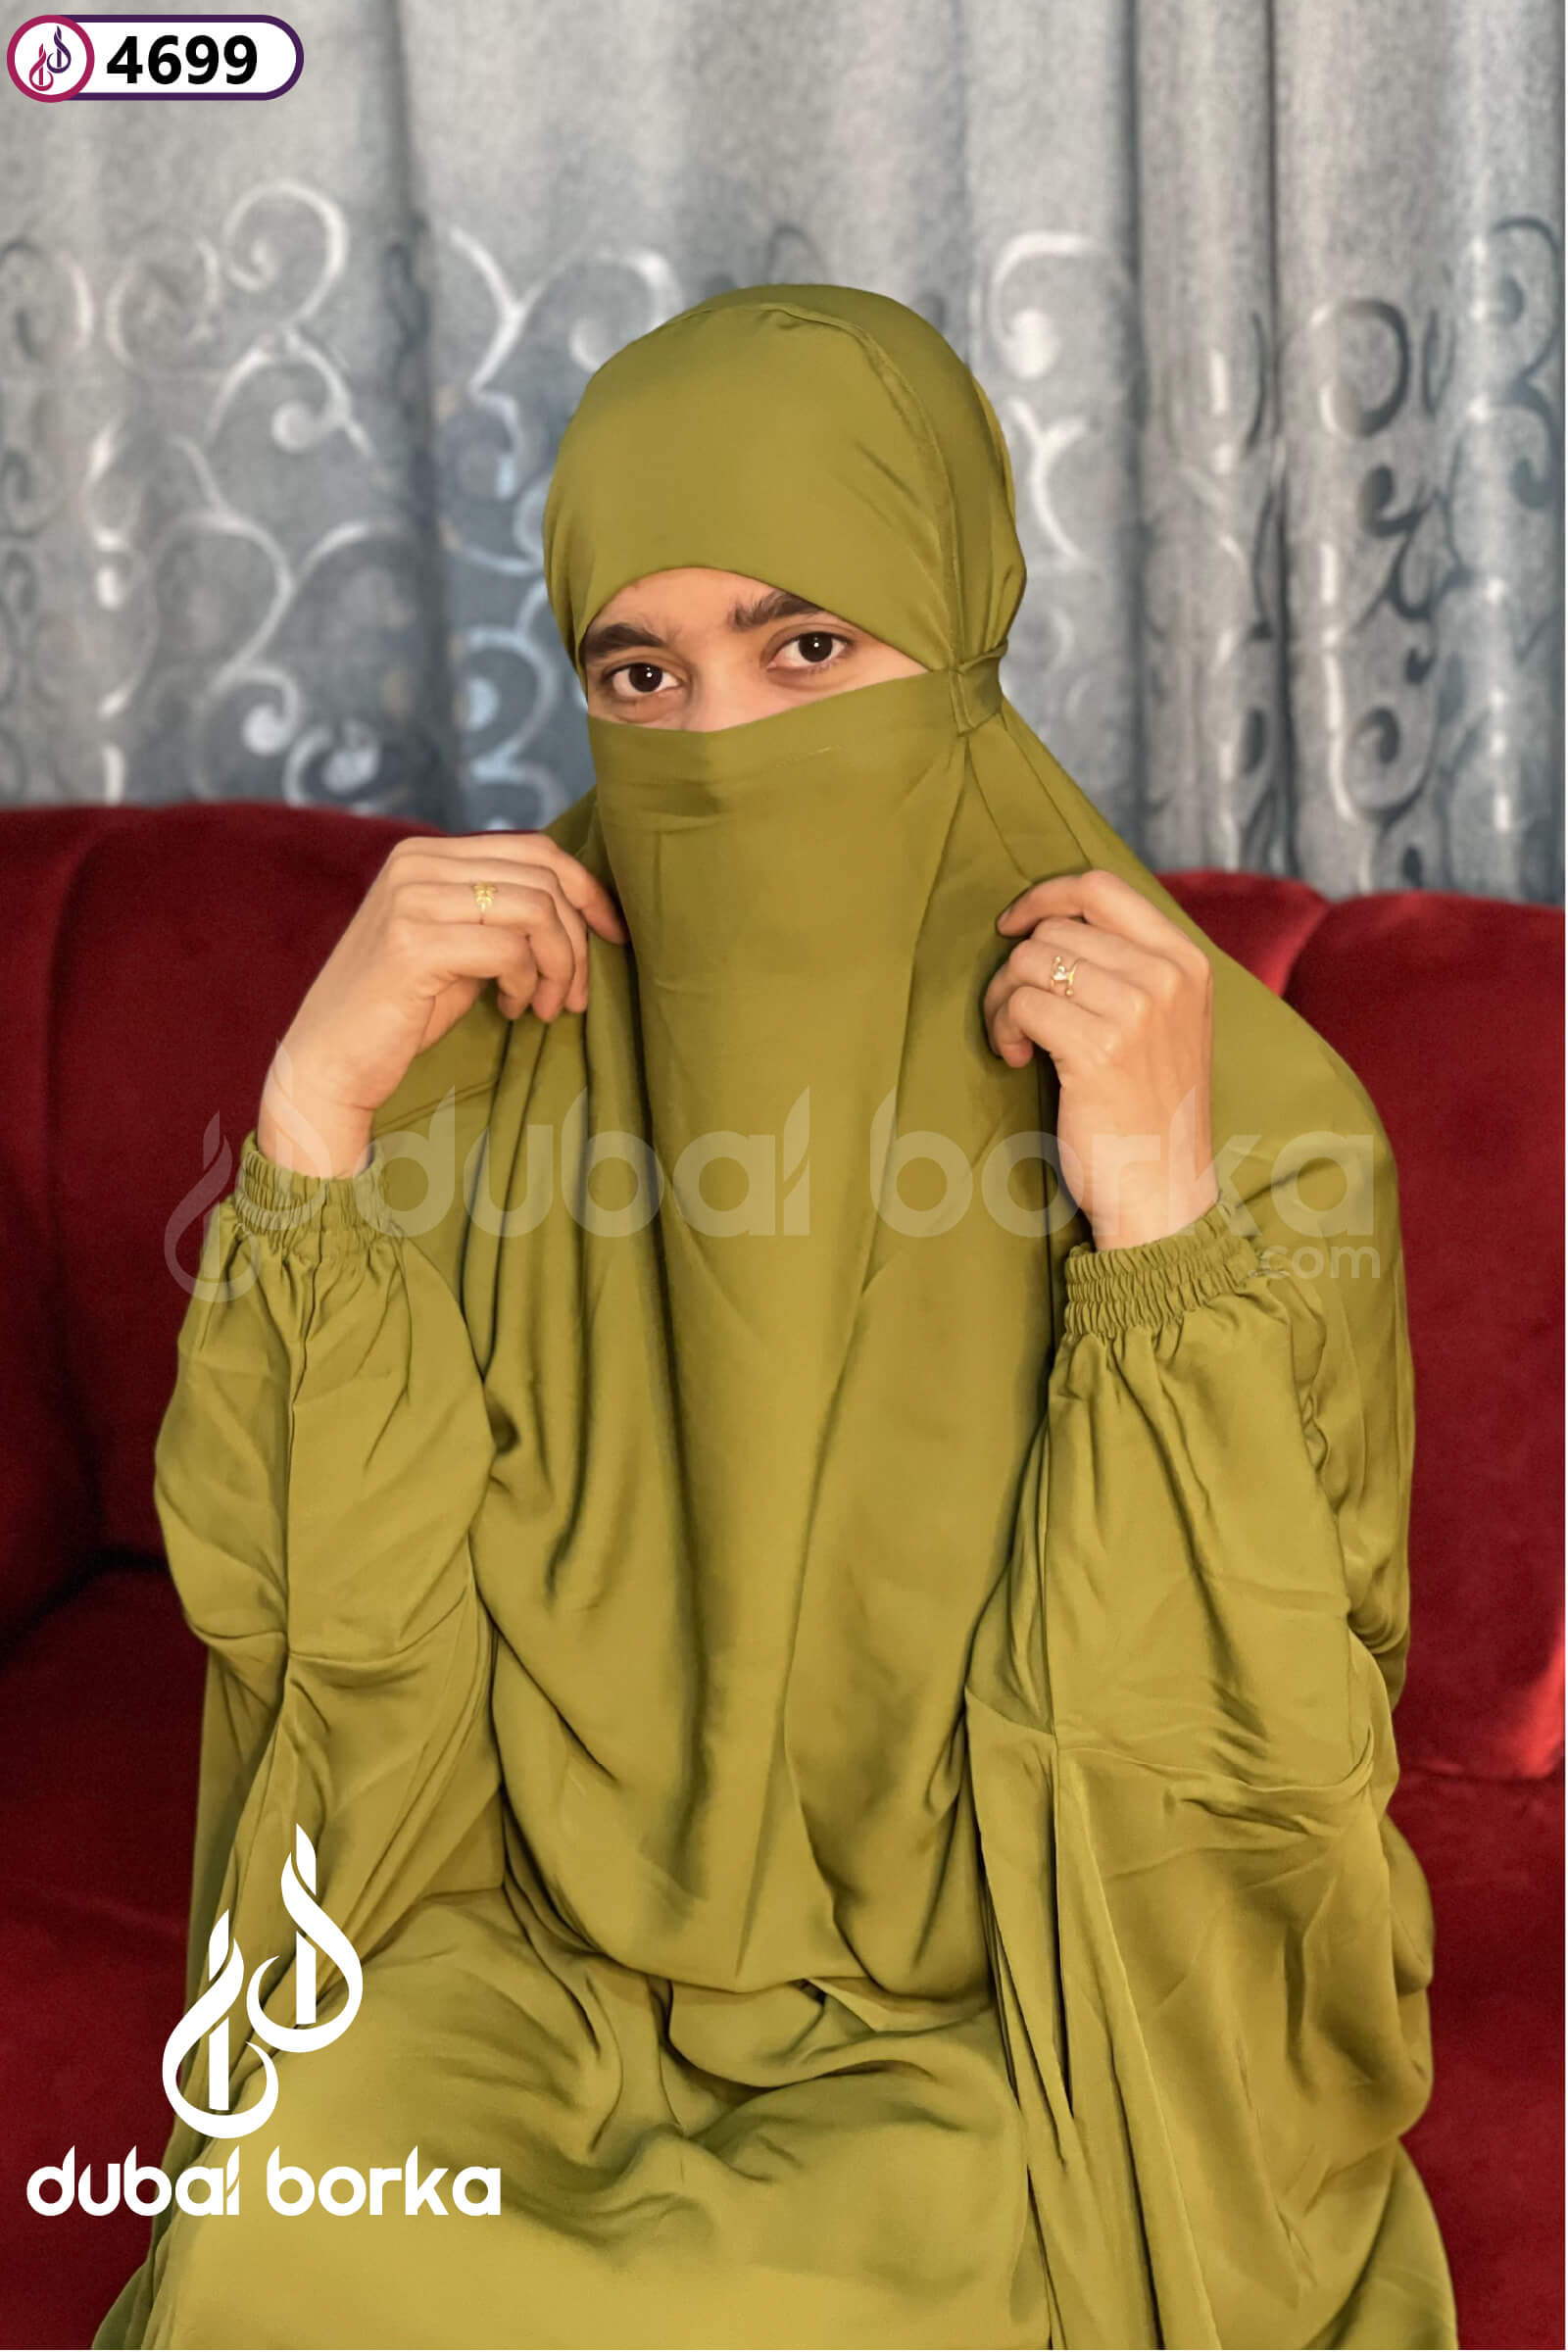 Plain Jilbab full coverage for hajj or umrah olive